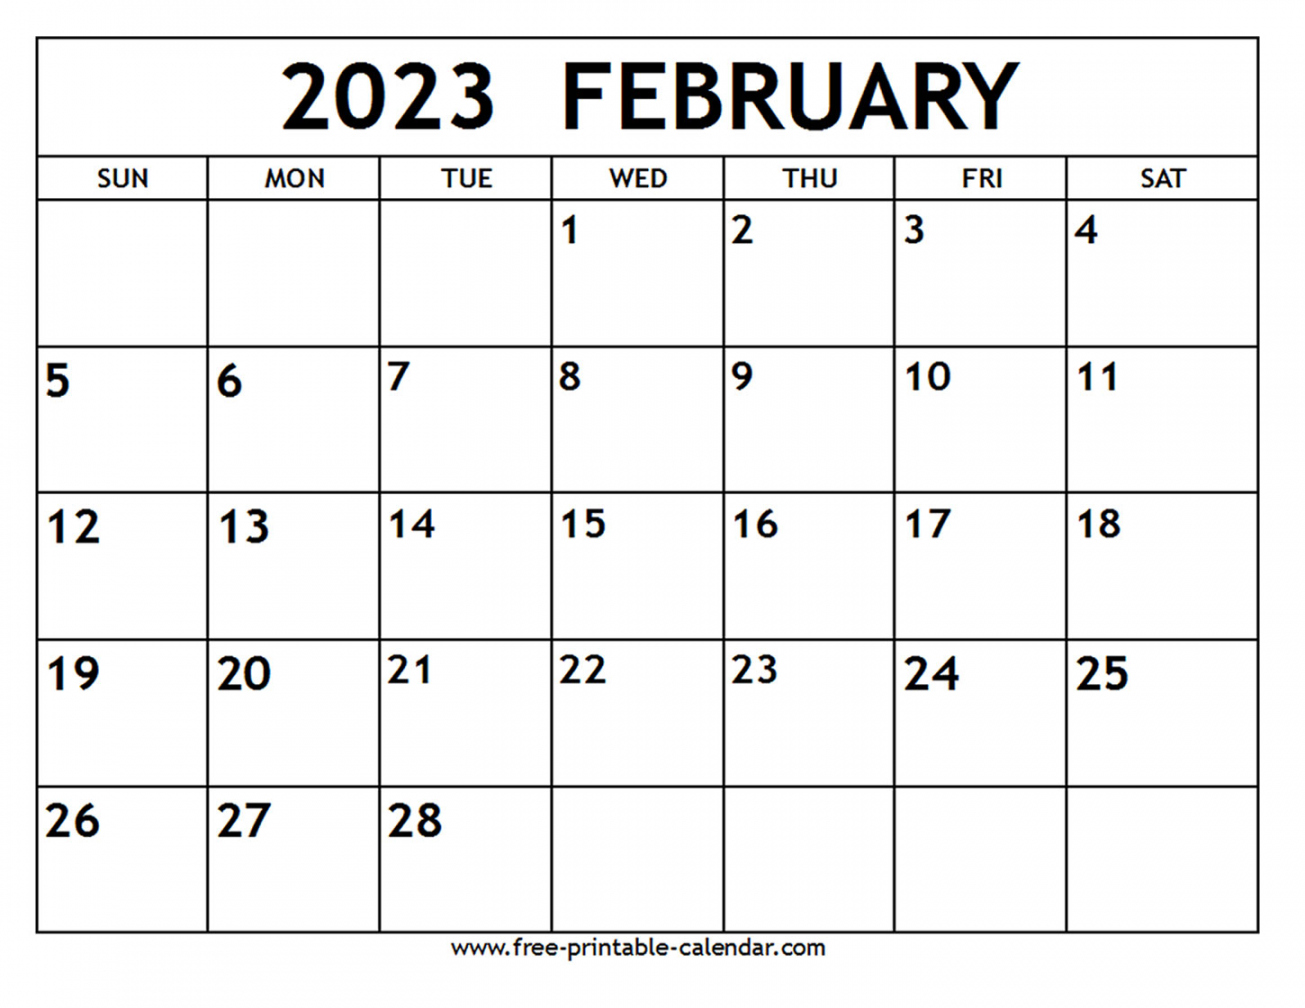 February 2023 Calendar Free Printable - Printable - February  Calendar - Free-printable-calendar